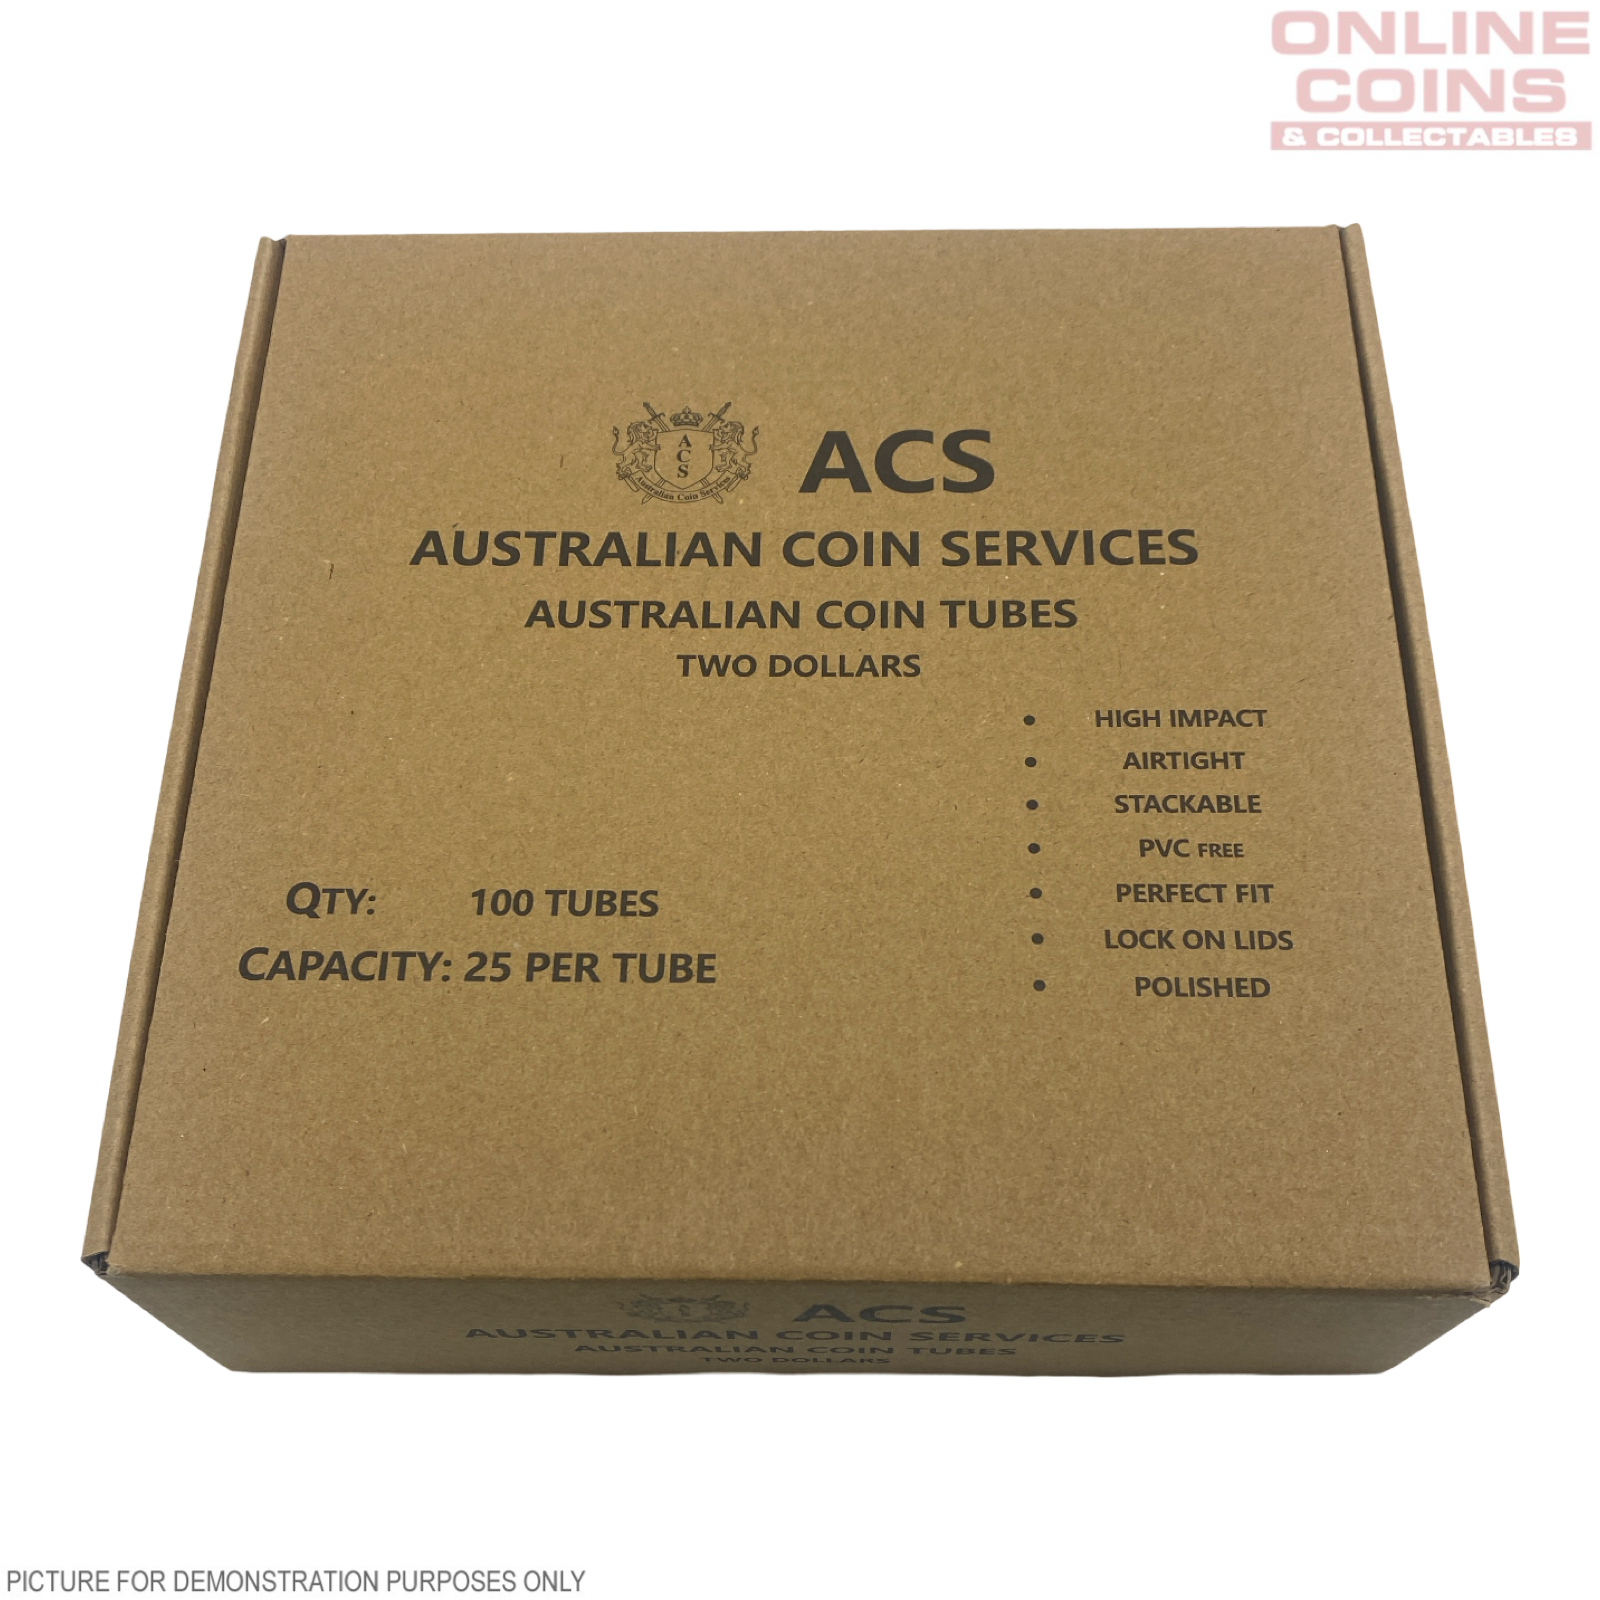 BULK BUY - Coin Tube for Australian $2 Coins - Stackable, PVC Free, Airtight - CASE OF 100